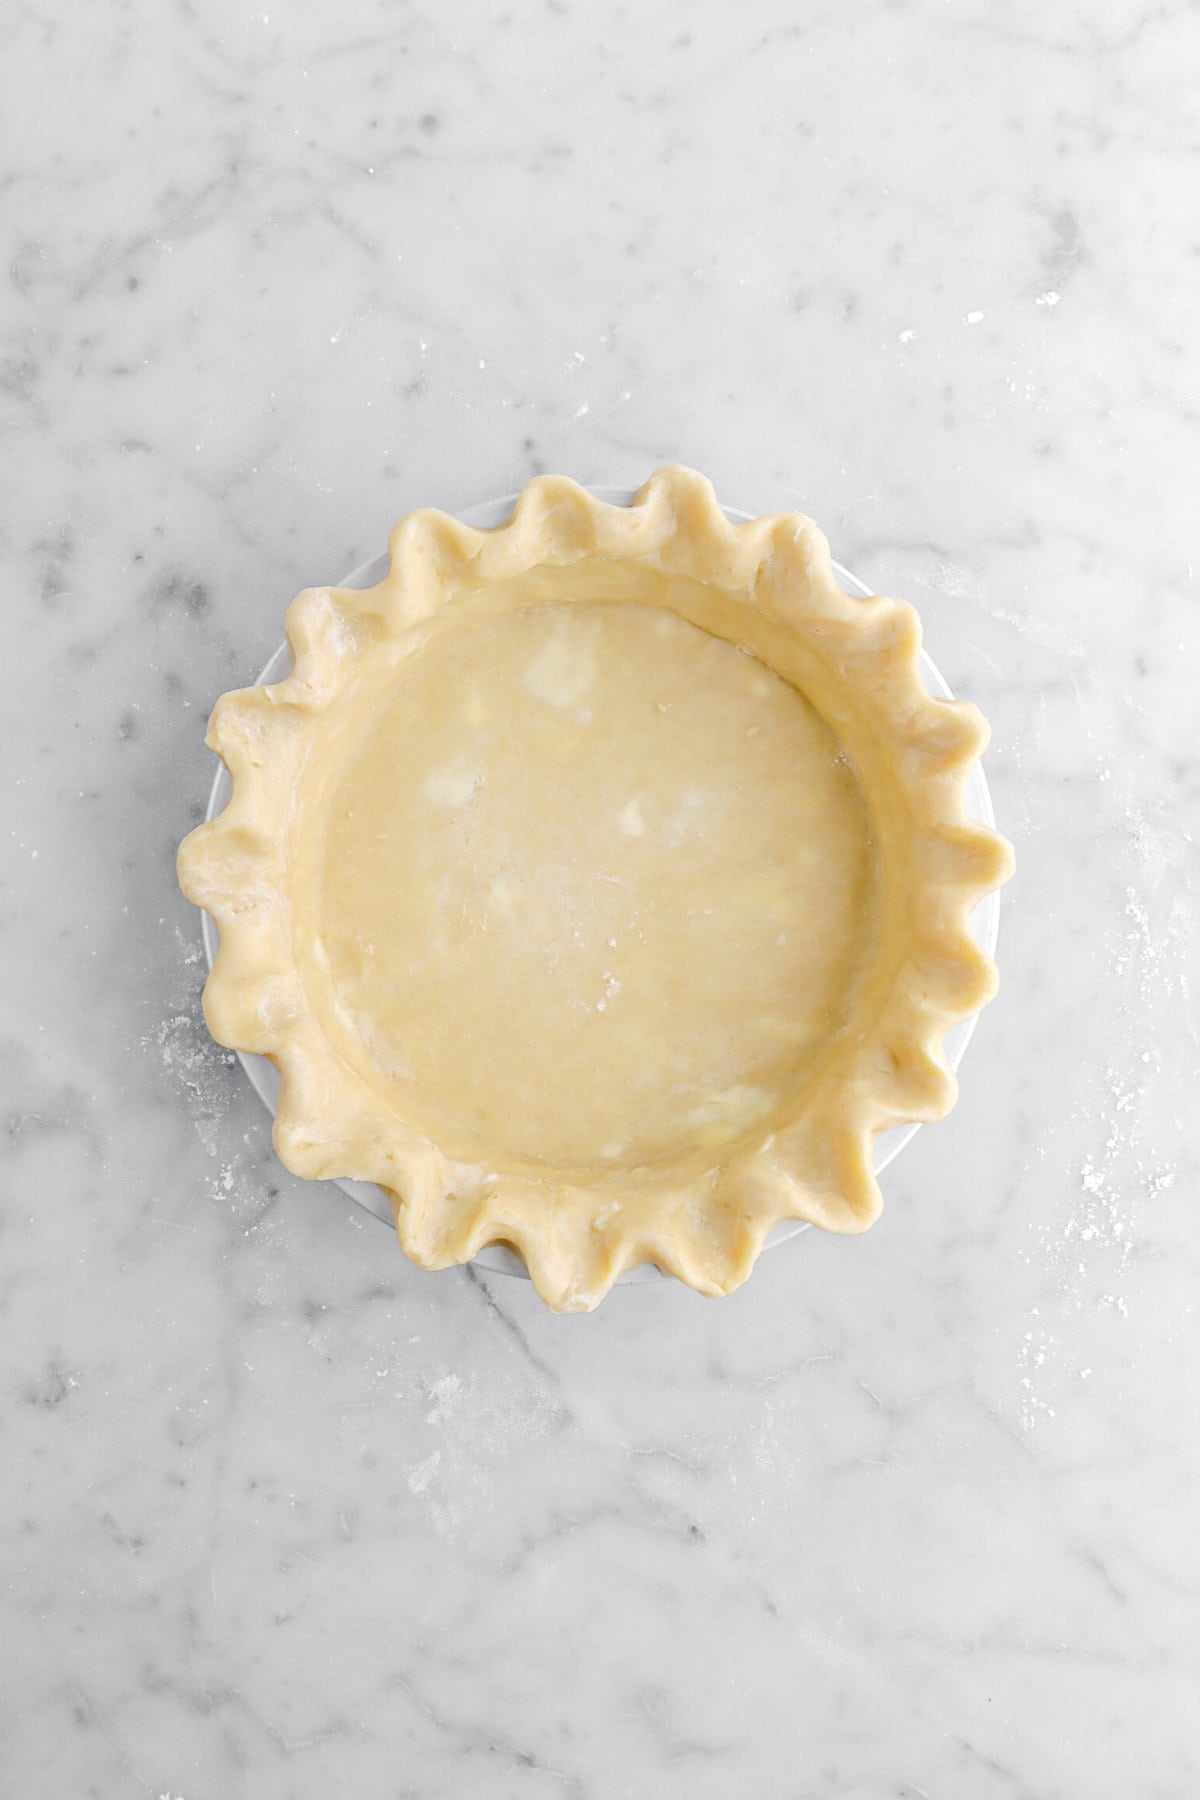 scalloped pie dough in metal pan.